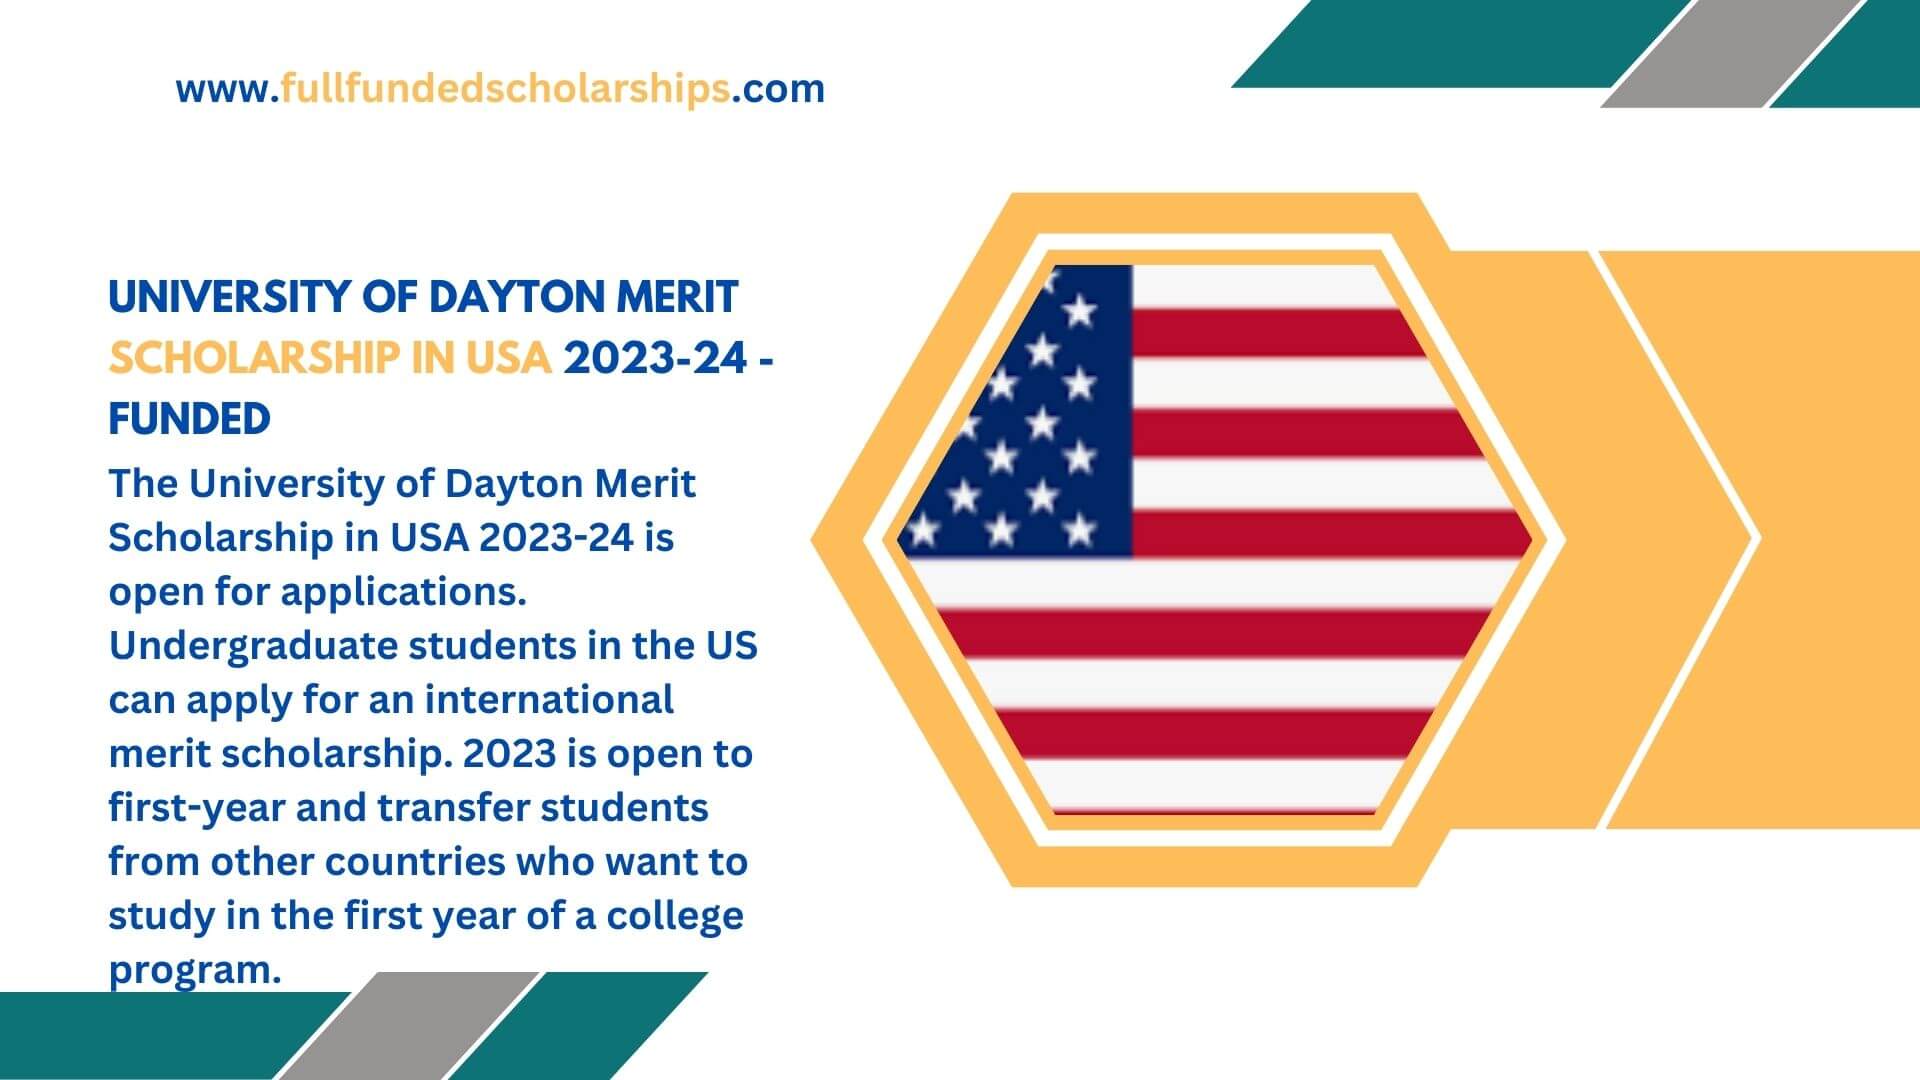 University of Dayton Merit Scholarship in USA 2023-24 - Funded